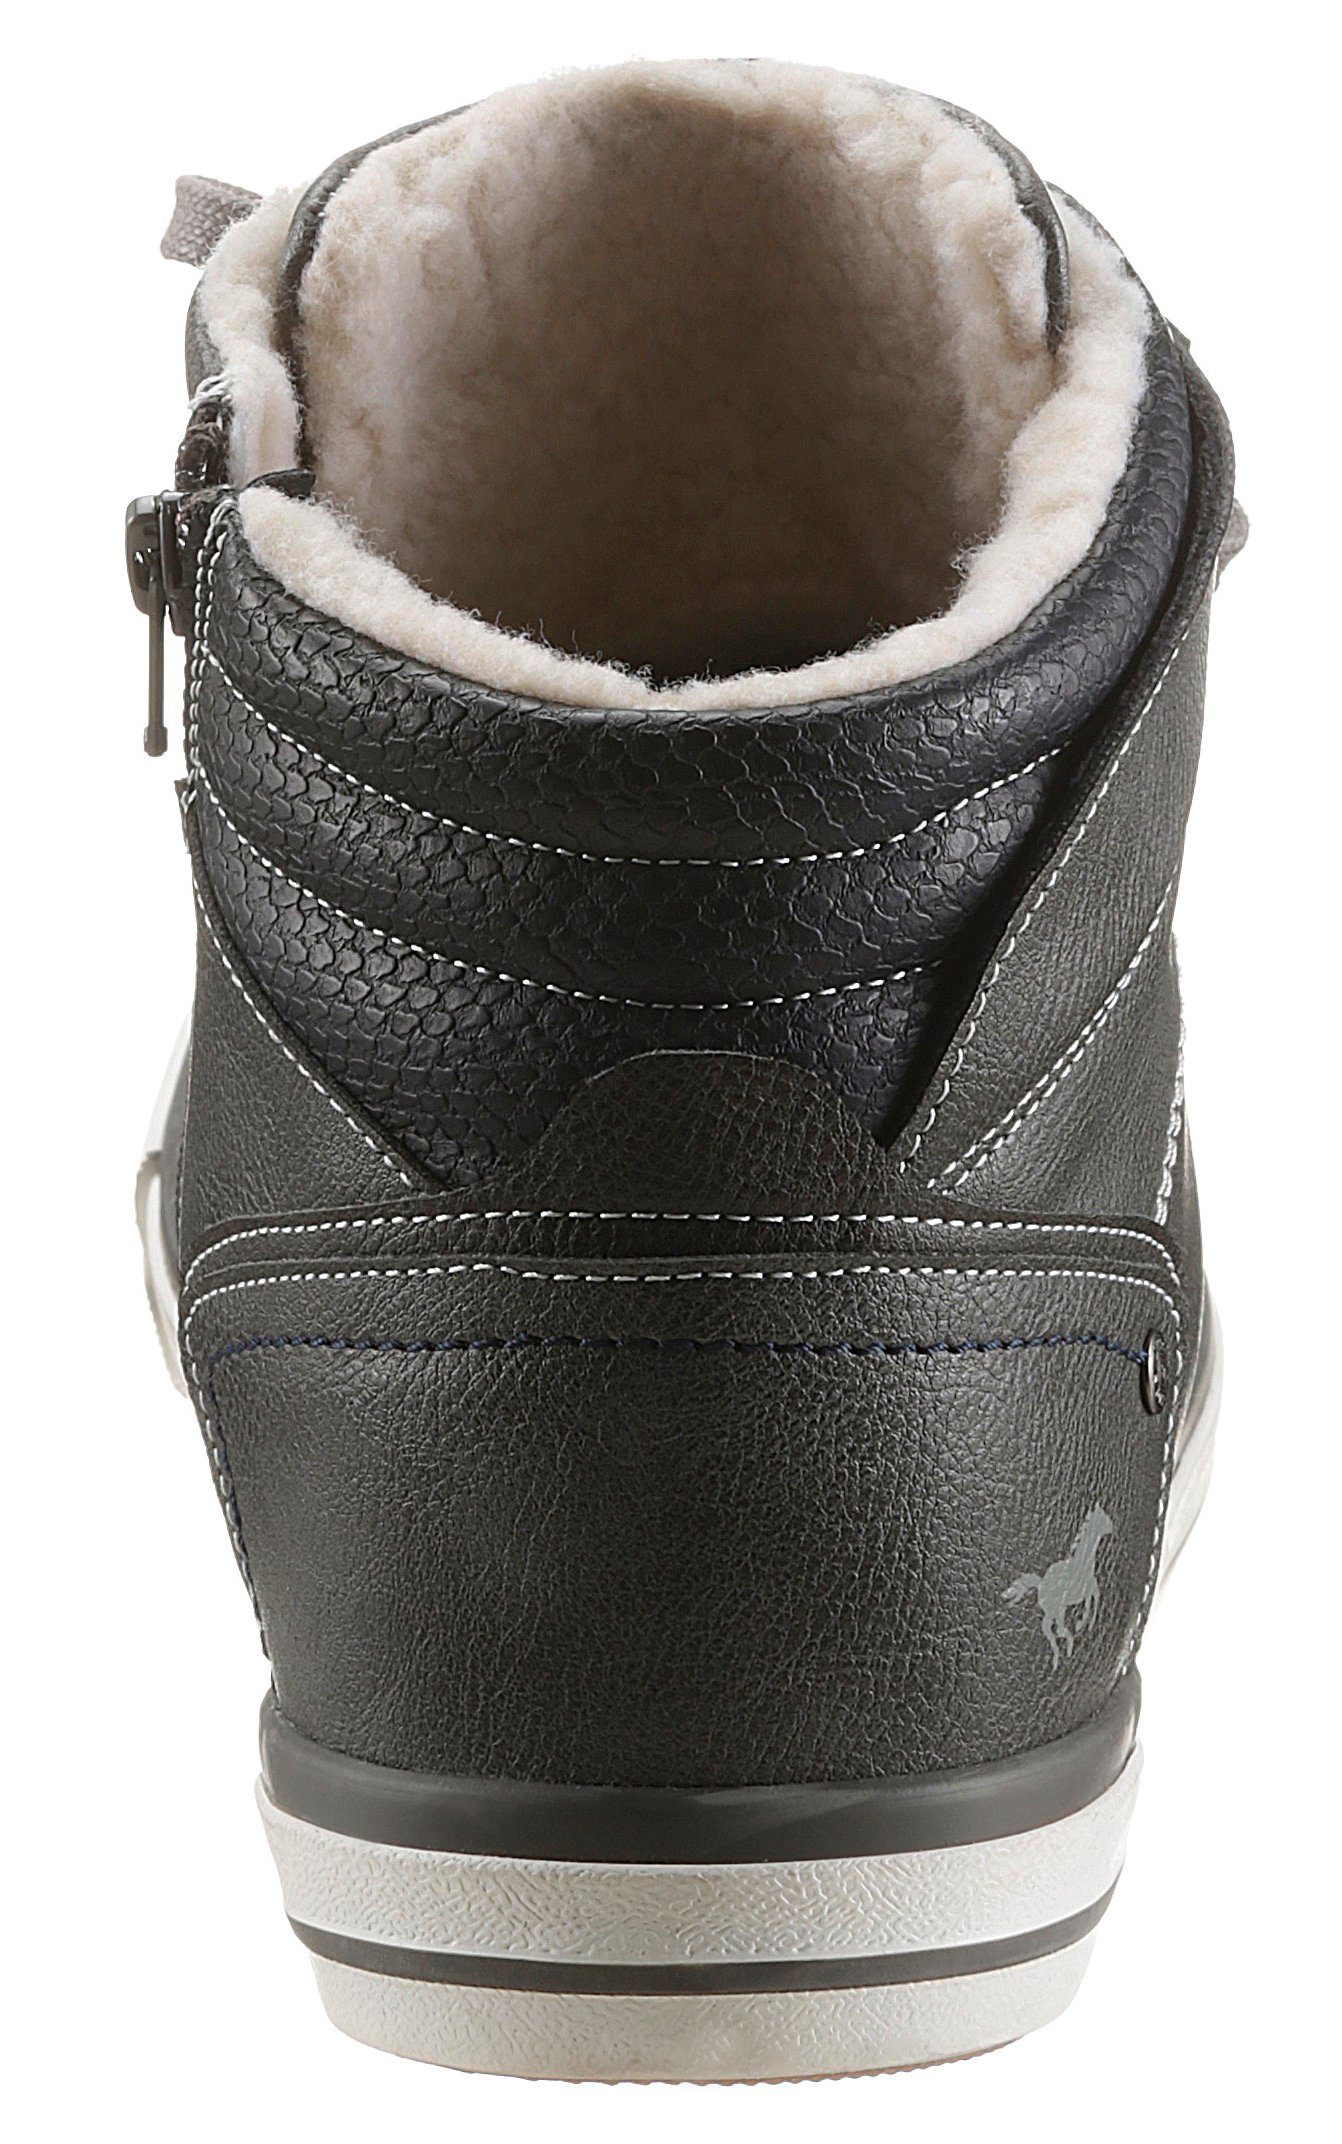 Shoes mit Innenreißverschluss grau-used Sneaker zweckmäßigem Mustang